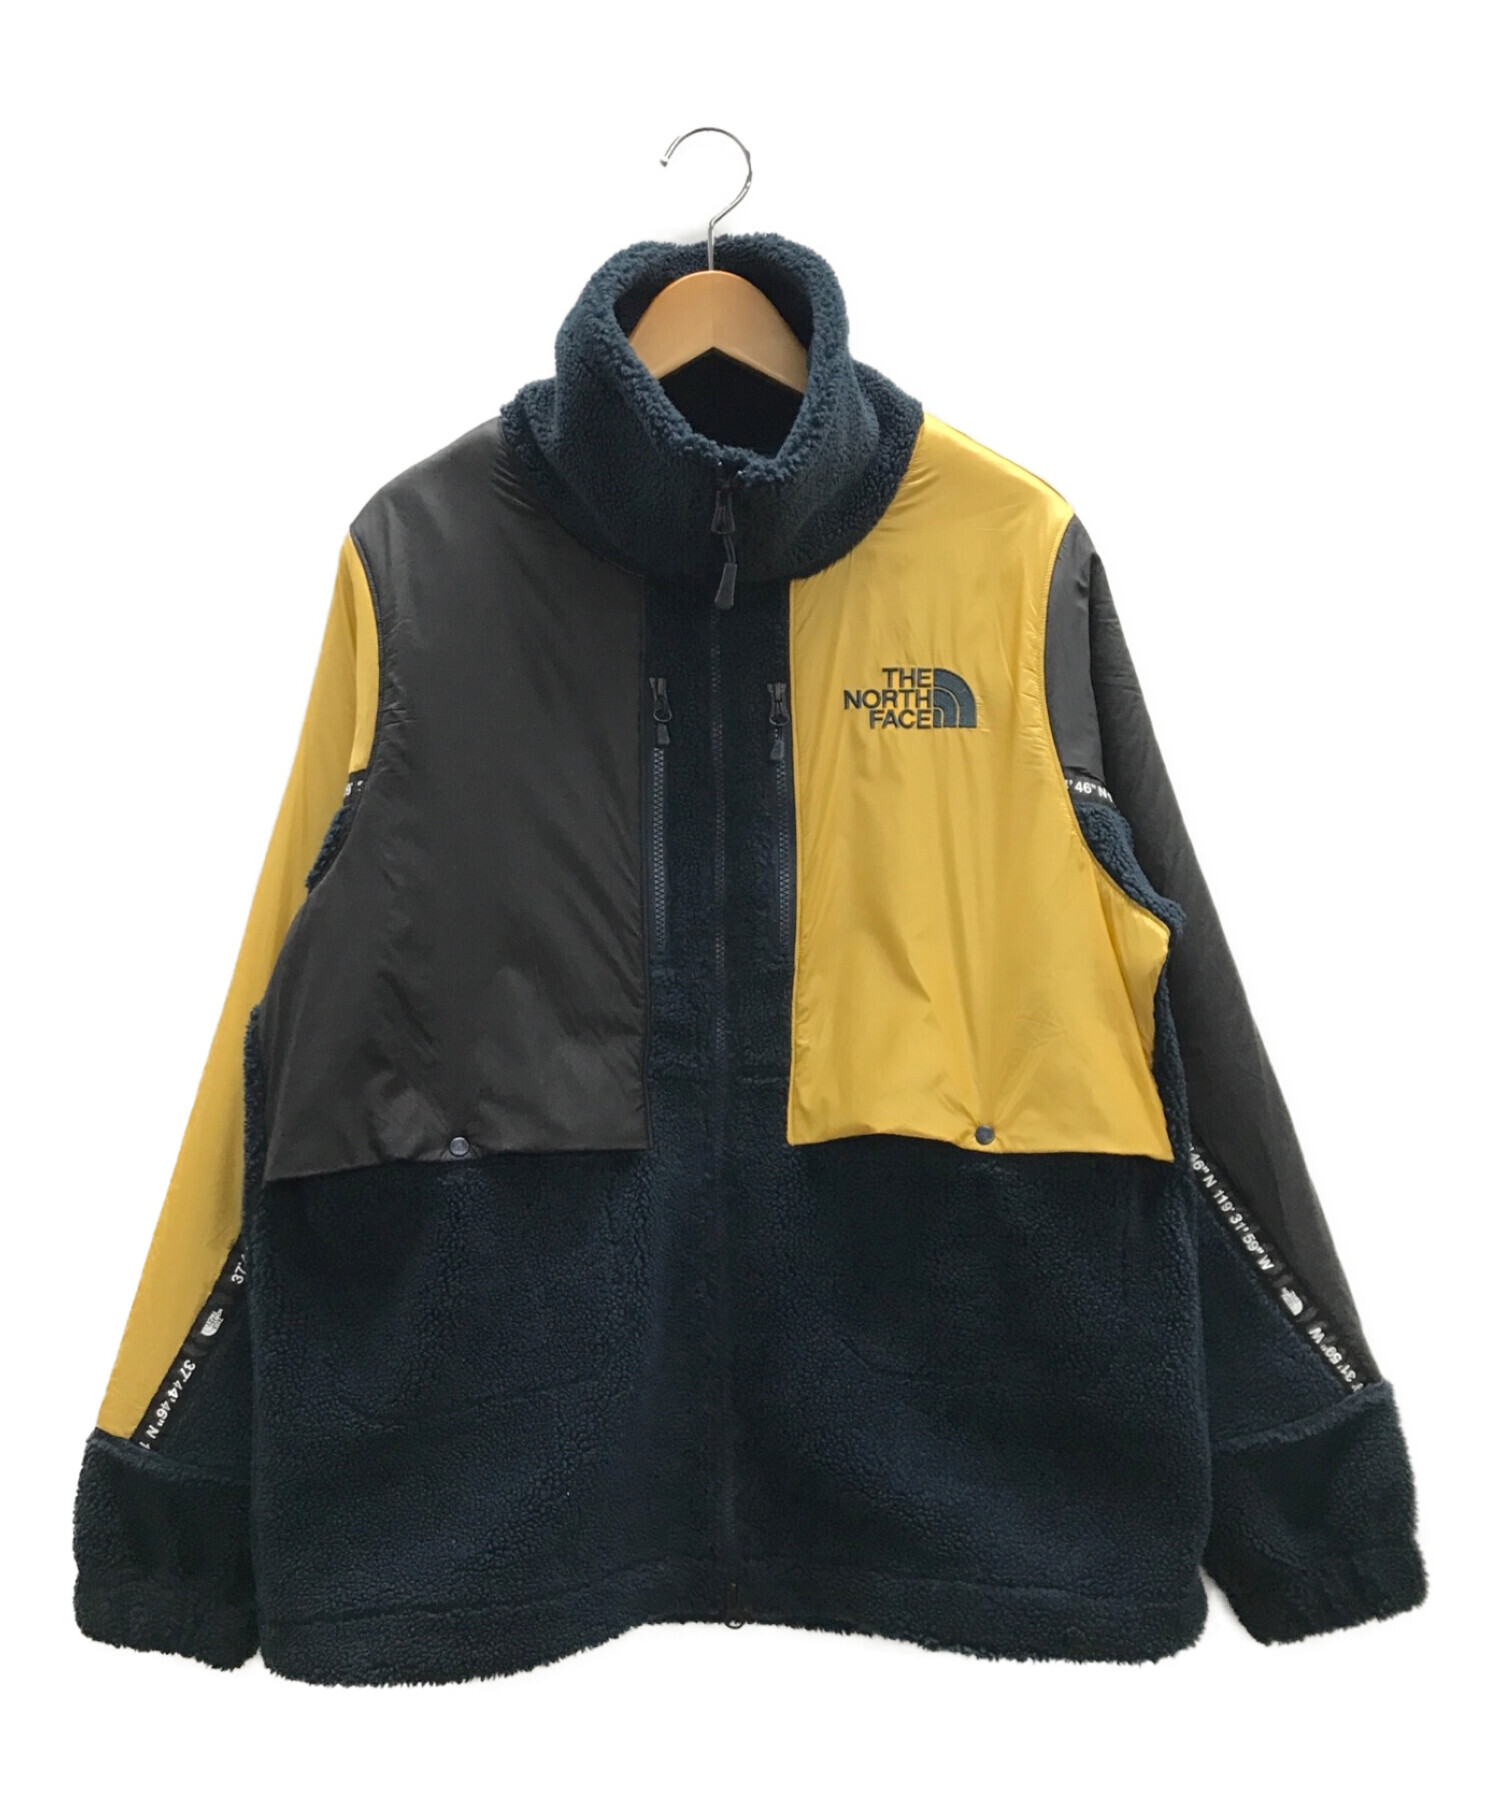 THE NORTH FACE×Kazuki Kuraishi (ザノースフェイス×カズキクライシ) High Neck Fleece  Jacket（ハイネックフリースジャケット） ネイビー サイズ:ASIA L